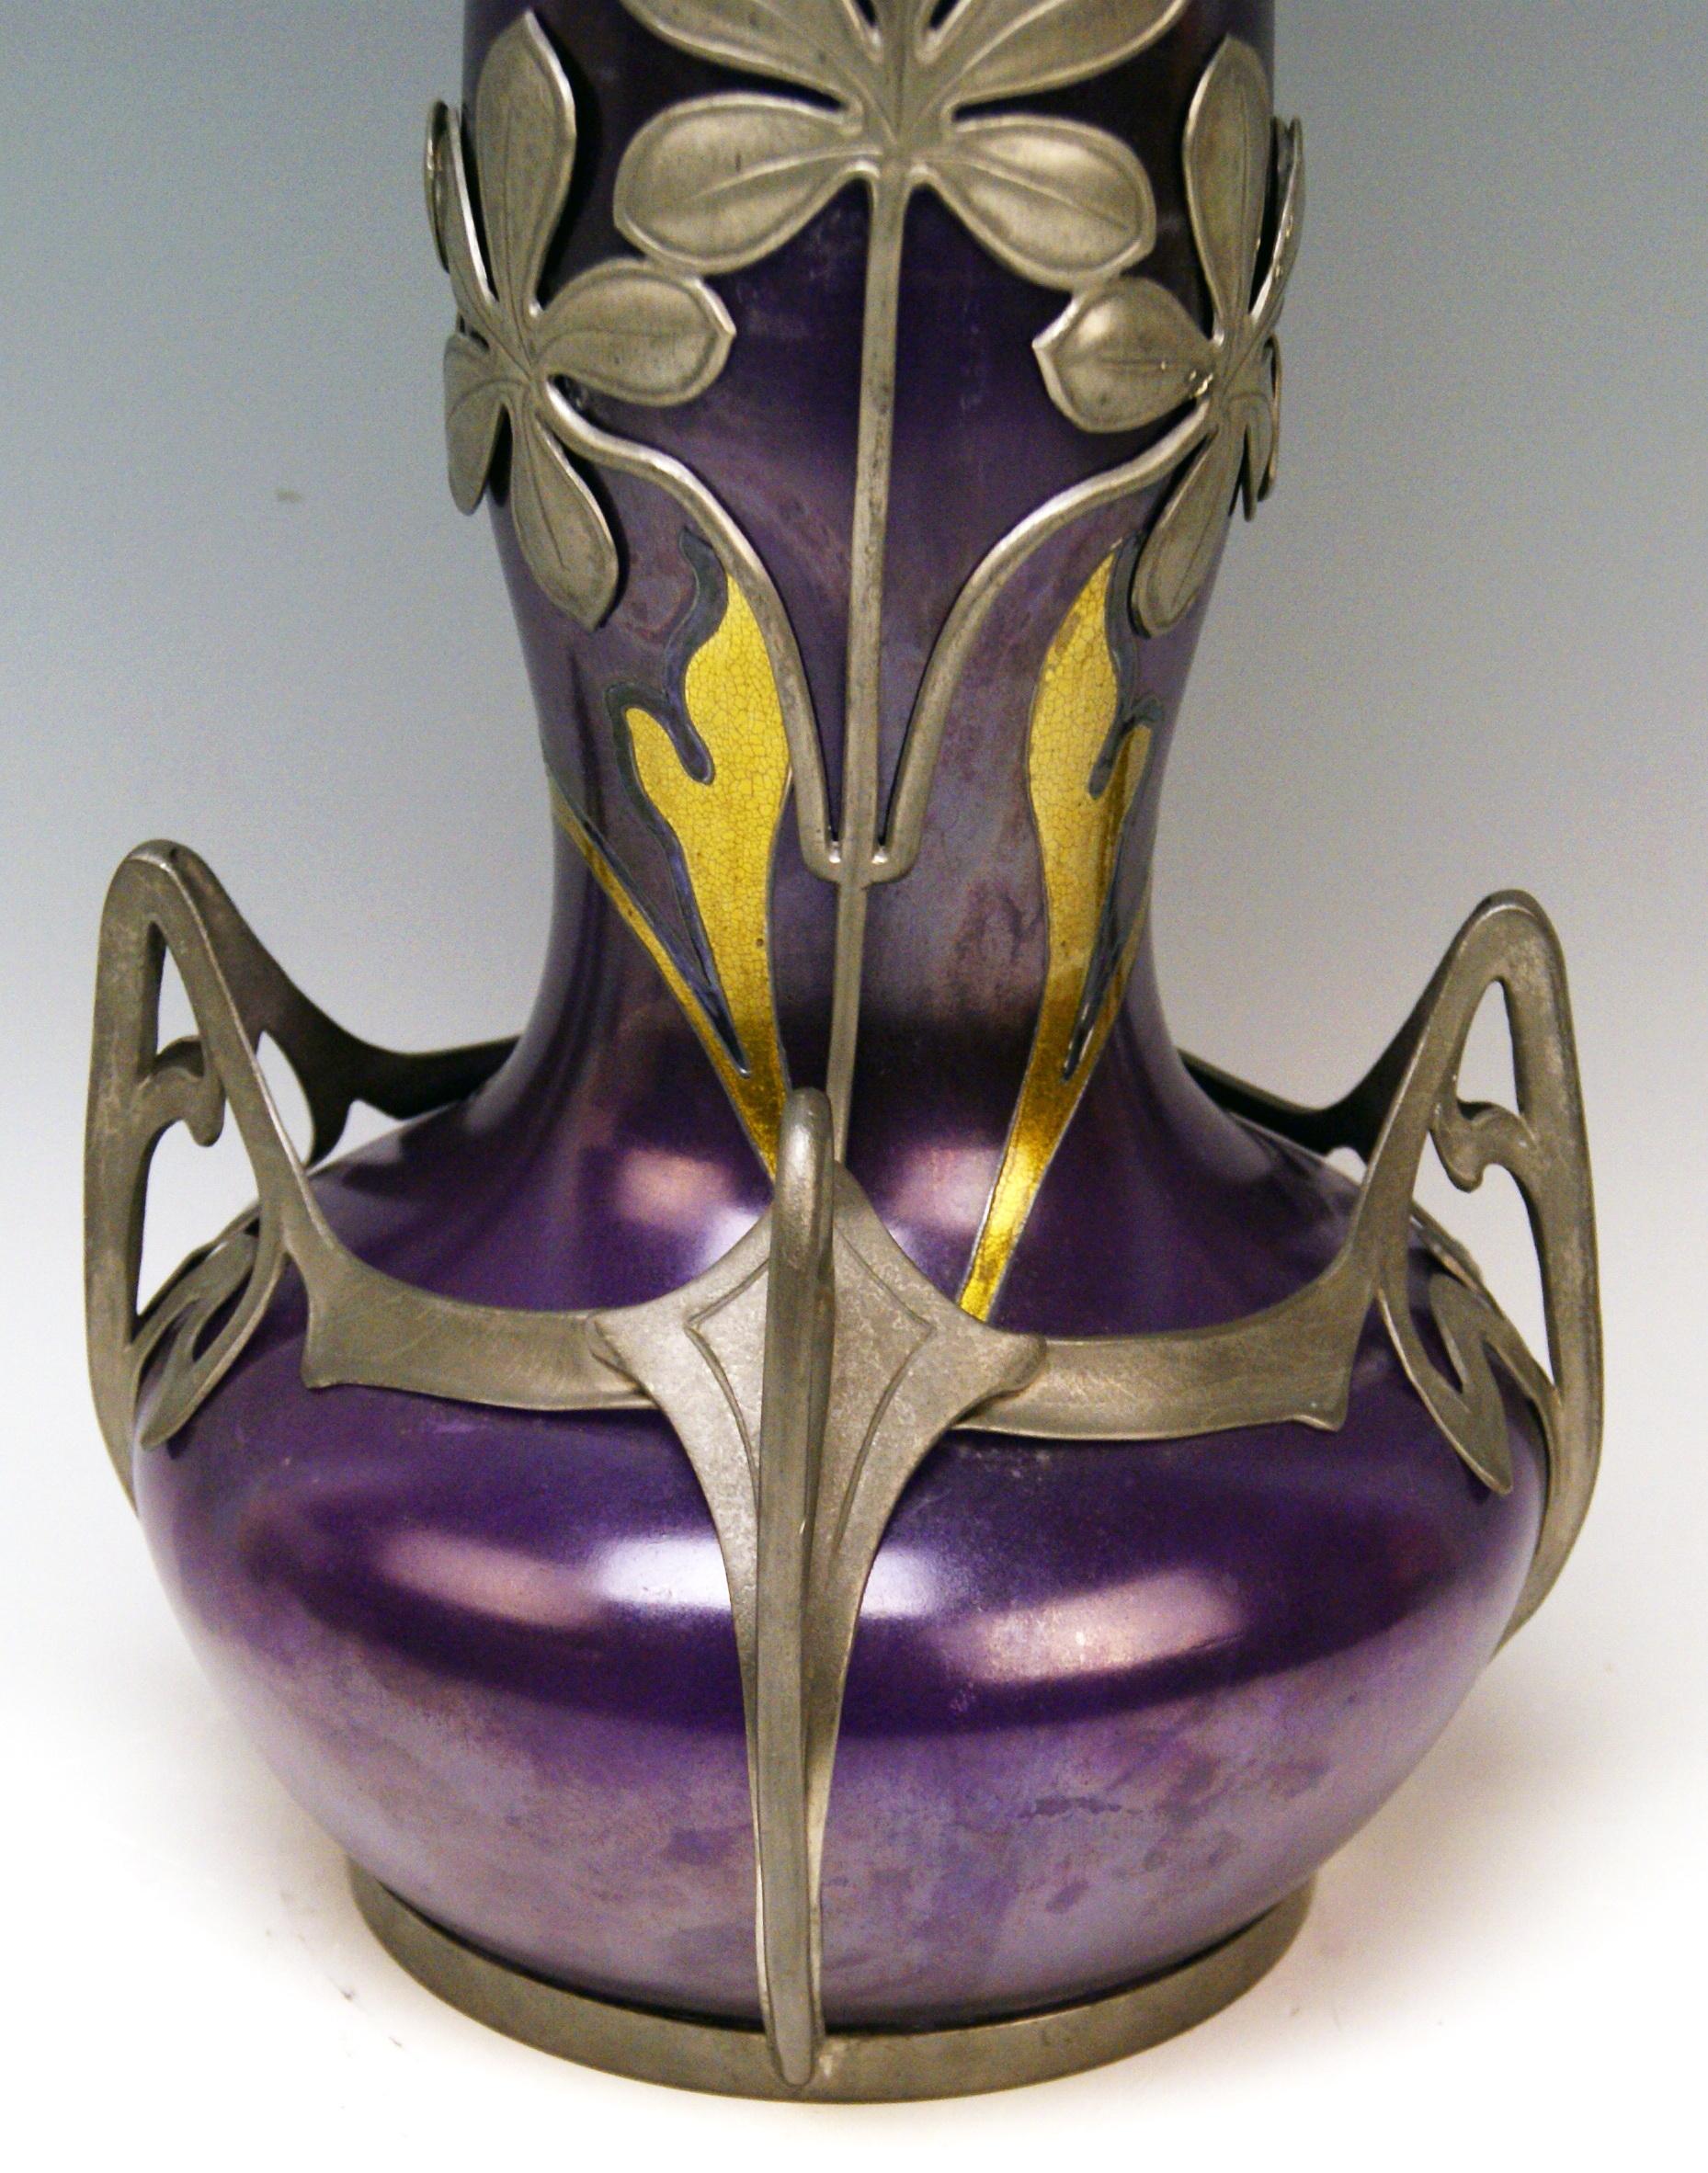 Glass Vase Loetz Widow Klostermuehle Art Nouveau 1902 Phaenomen Genre Turmalin 2/538 